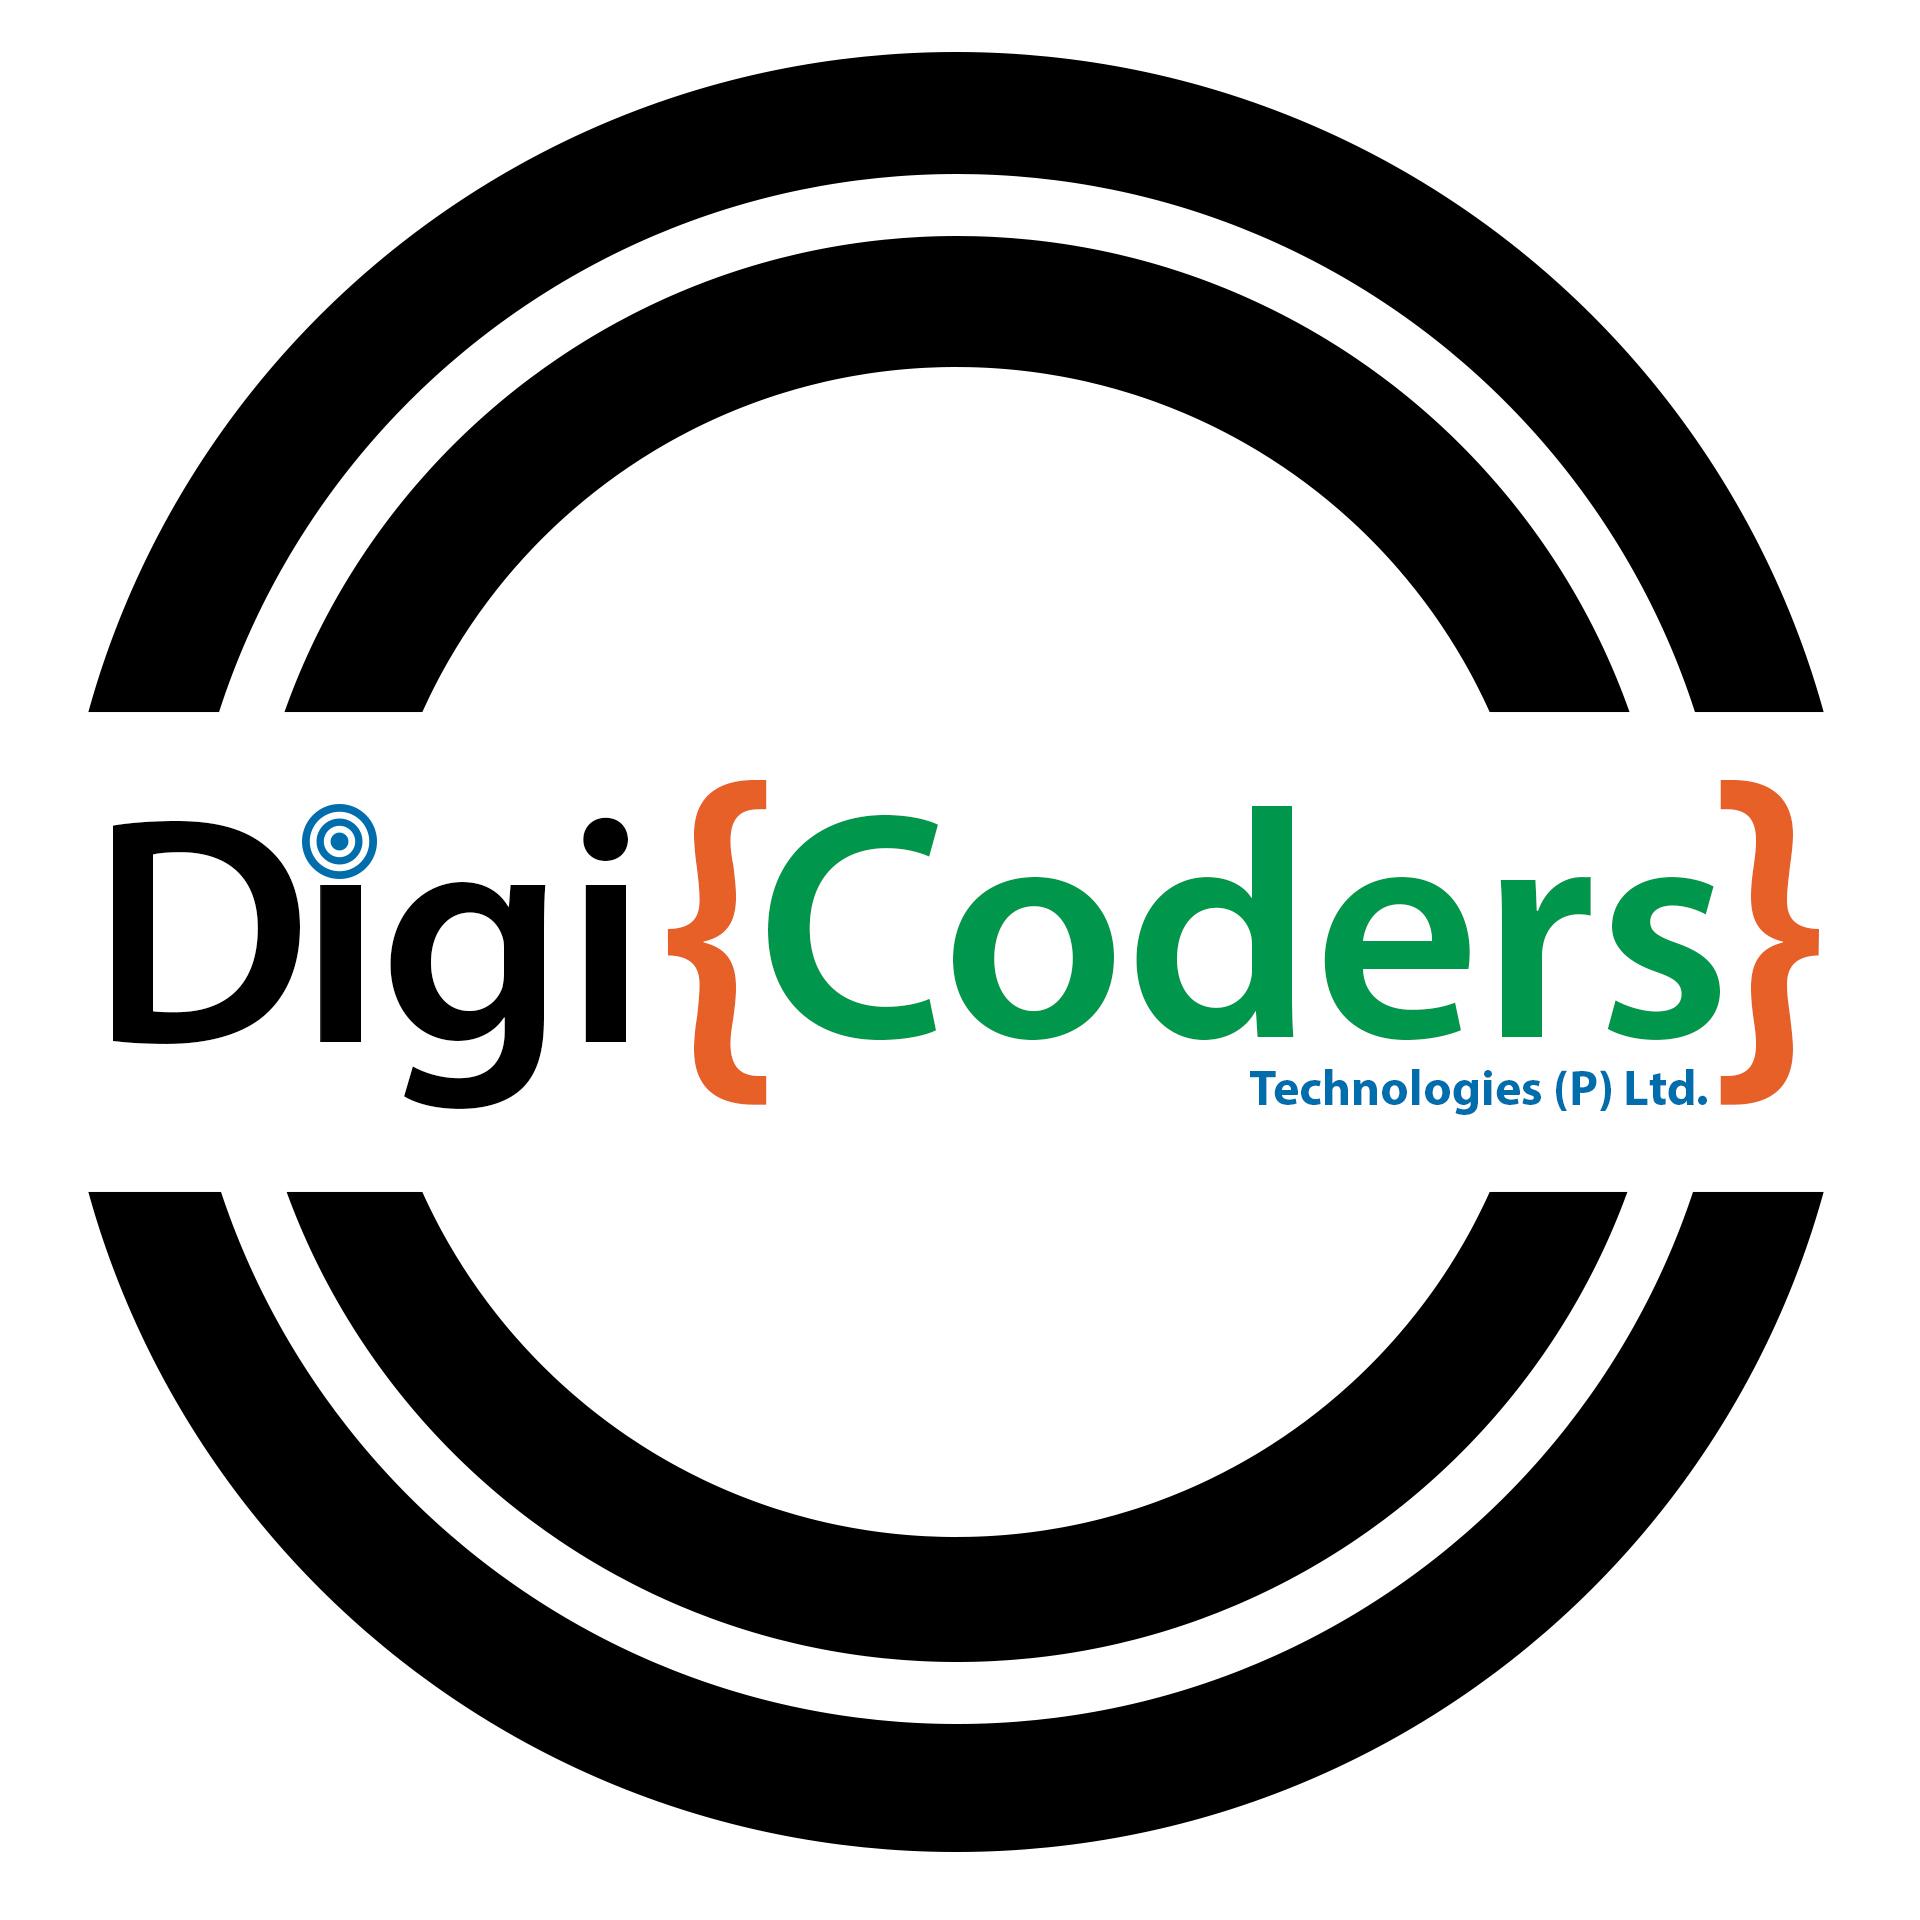 DigiCoders Technologies profile on Qualified.One